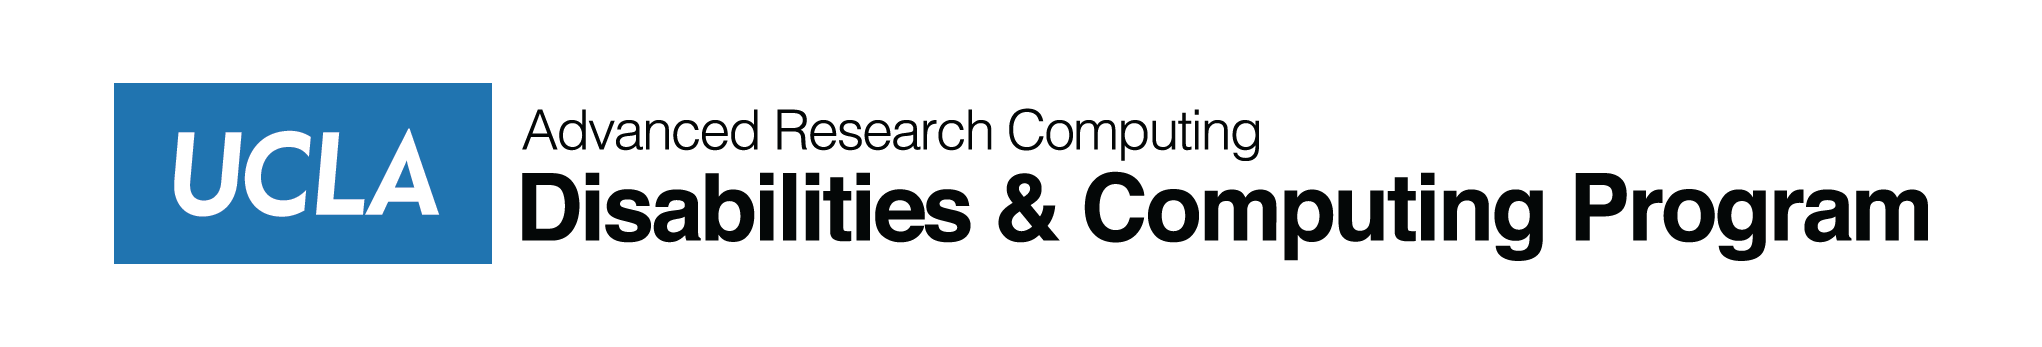 UCLA Disabilities & Computing Program, Office of Information Technology